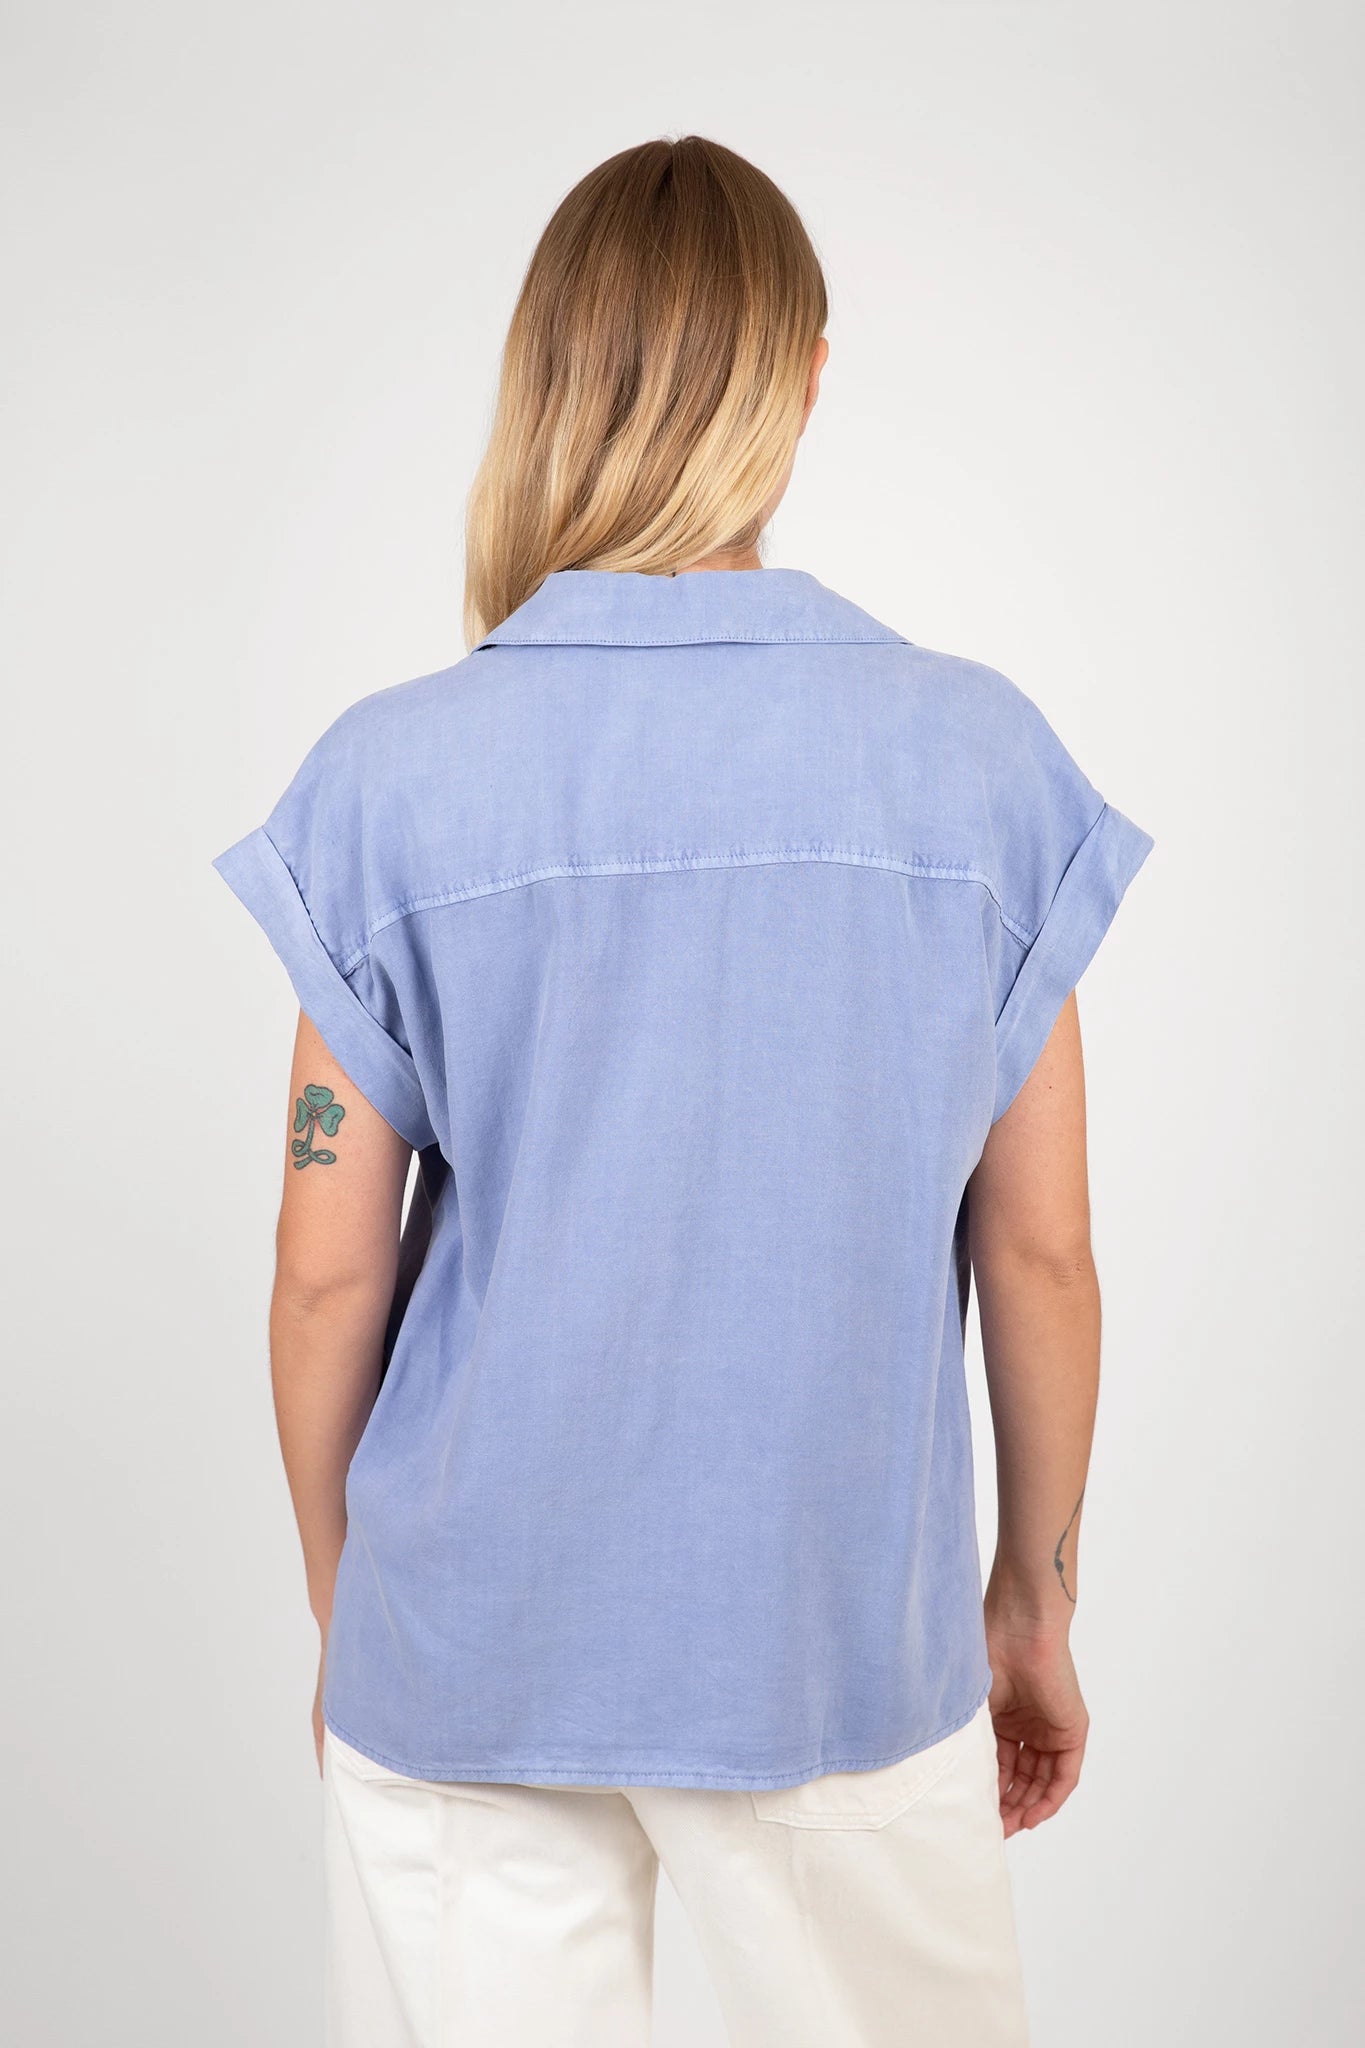 Two Pocket Short Sleeve Shirt Tops Bella Dahl   